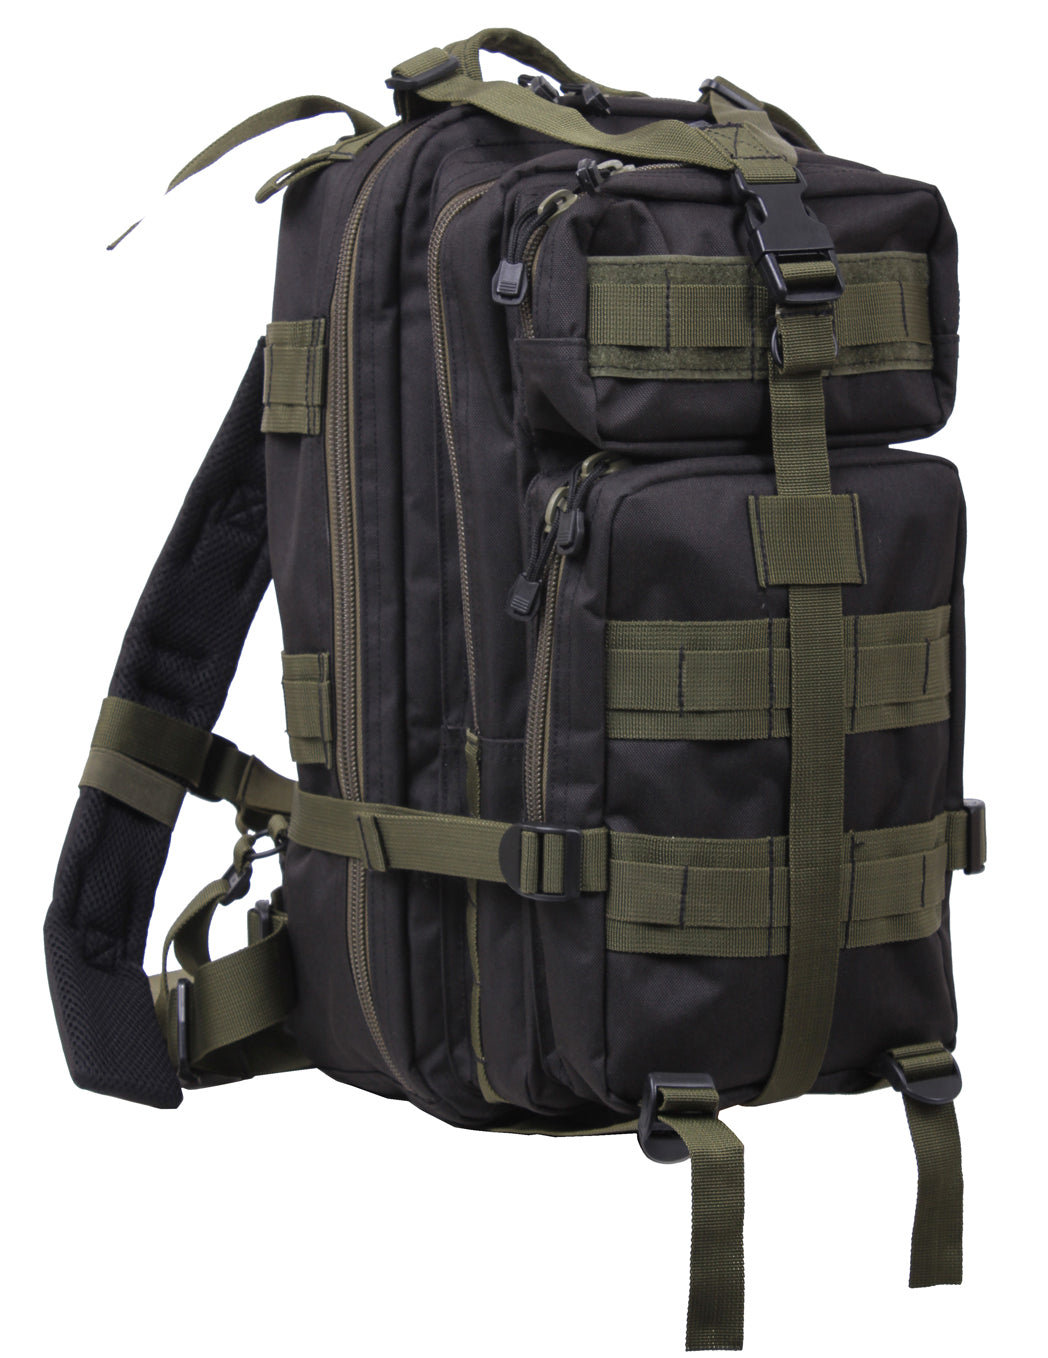 Milspec Military Trauma Kit First Aid Supplies & Snake Bite Kits MilTac Tactical Military Outdoor Gear Australia